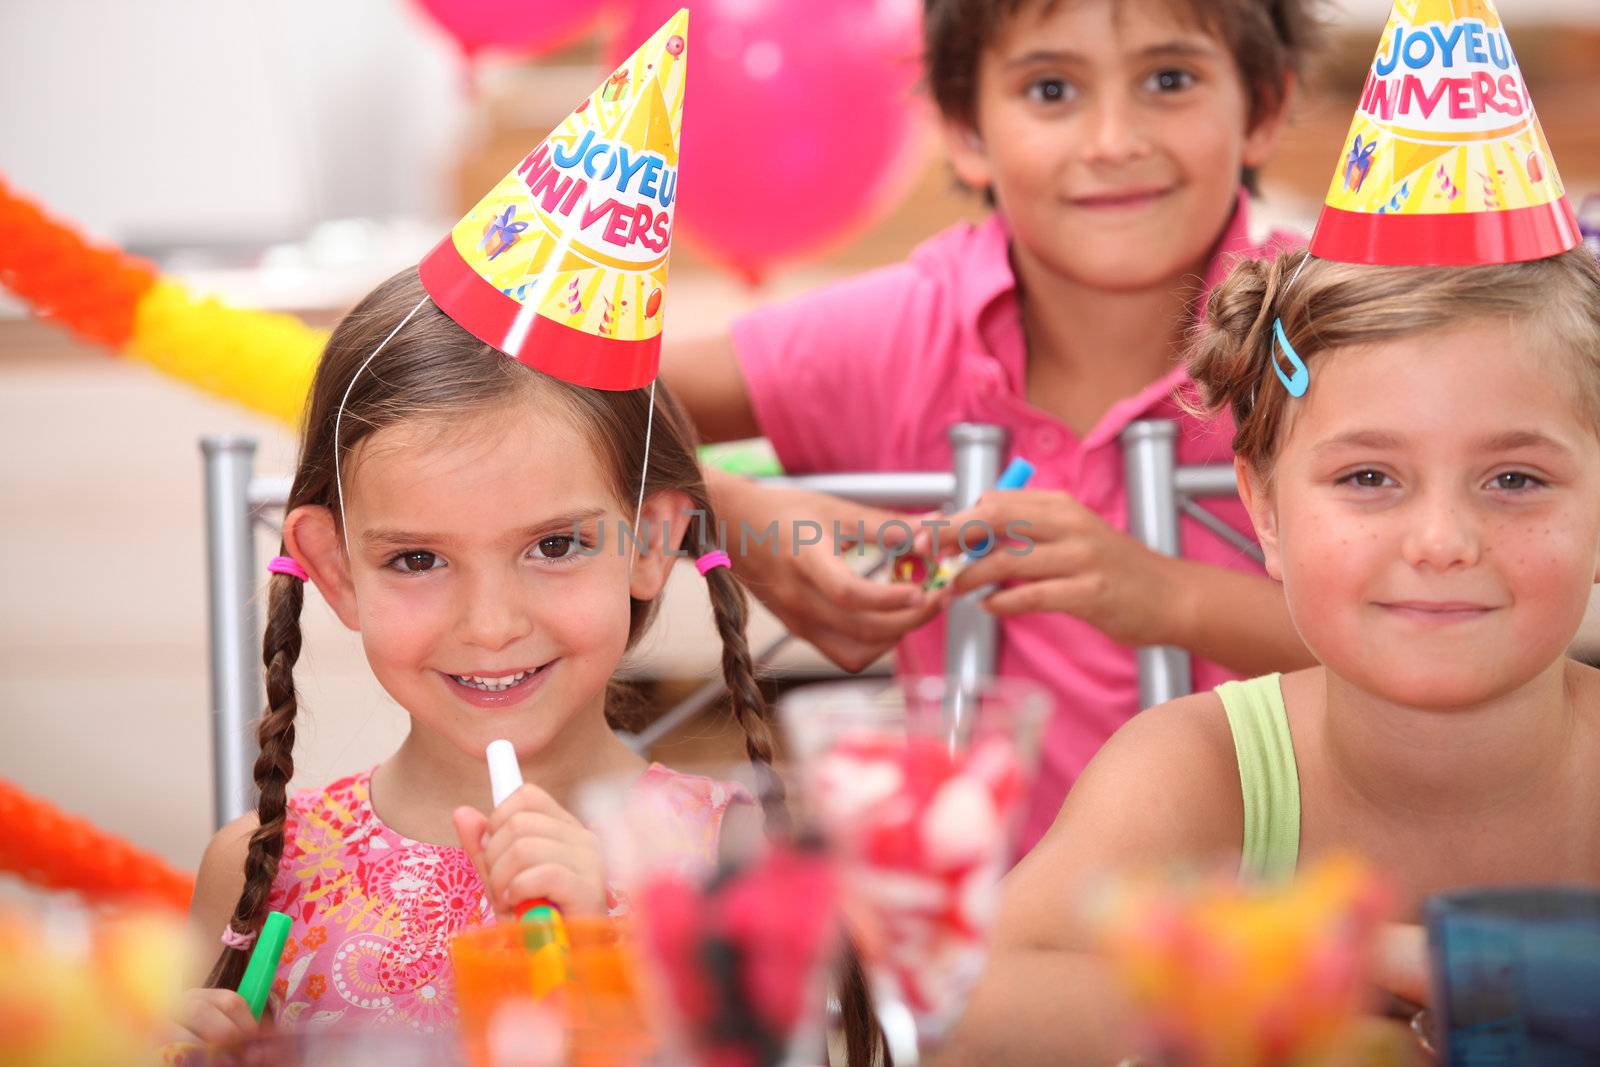 Children's birthday party by phovoir